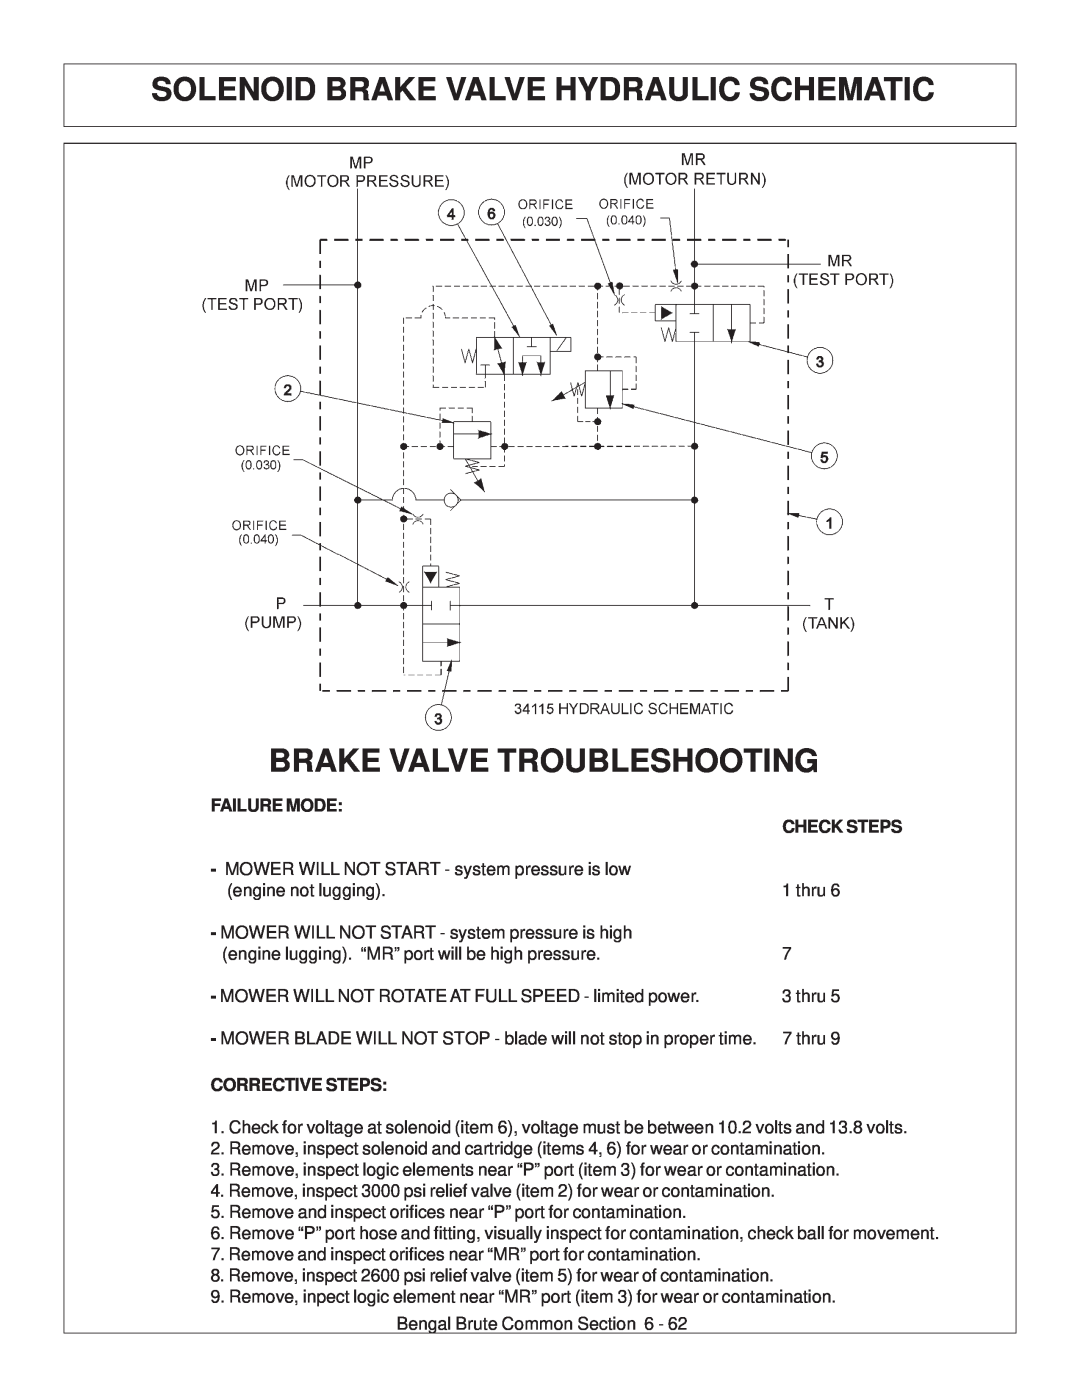 Tiger JD 62-6420 manual Solenoid Brake Valve Hydraulic Schematic, Brake Valve Troubleshooting, Failure Mode Check Steps 